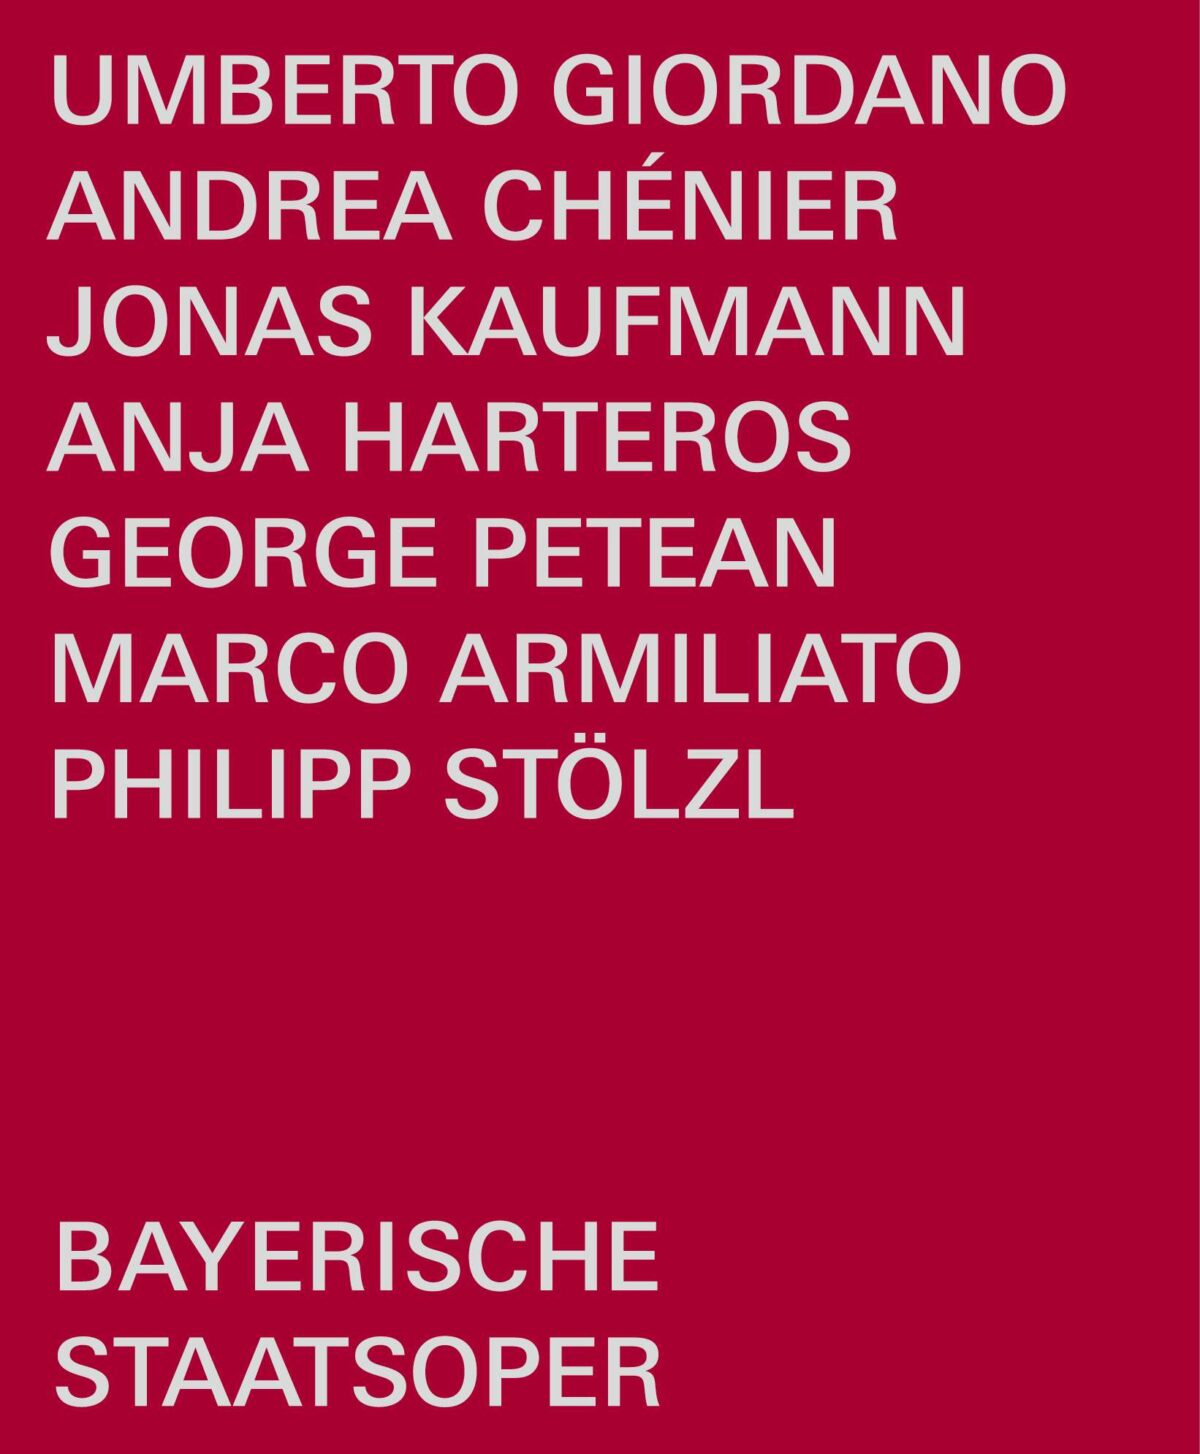 Blu-ray-Rezension: Umberto Giordano Andrea Chénier, Kaufmann und Harteros  klassik-begeistert.de, 24. August 2023